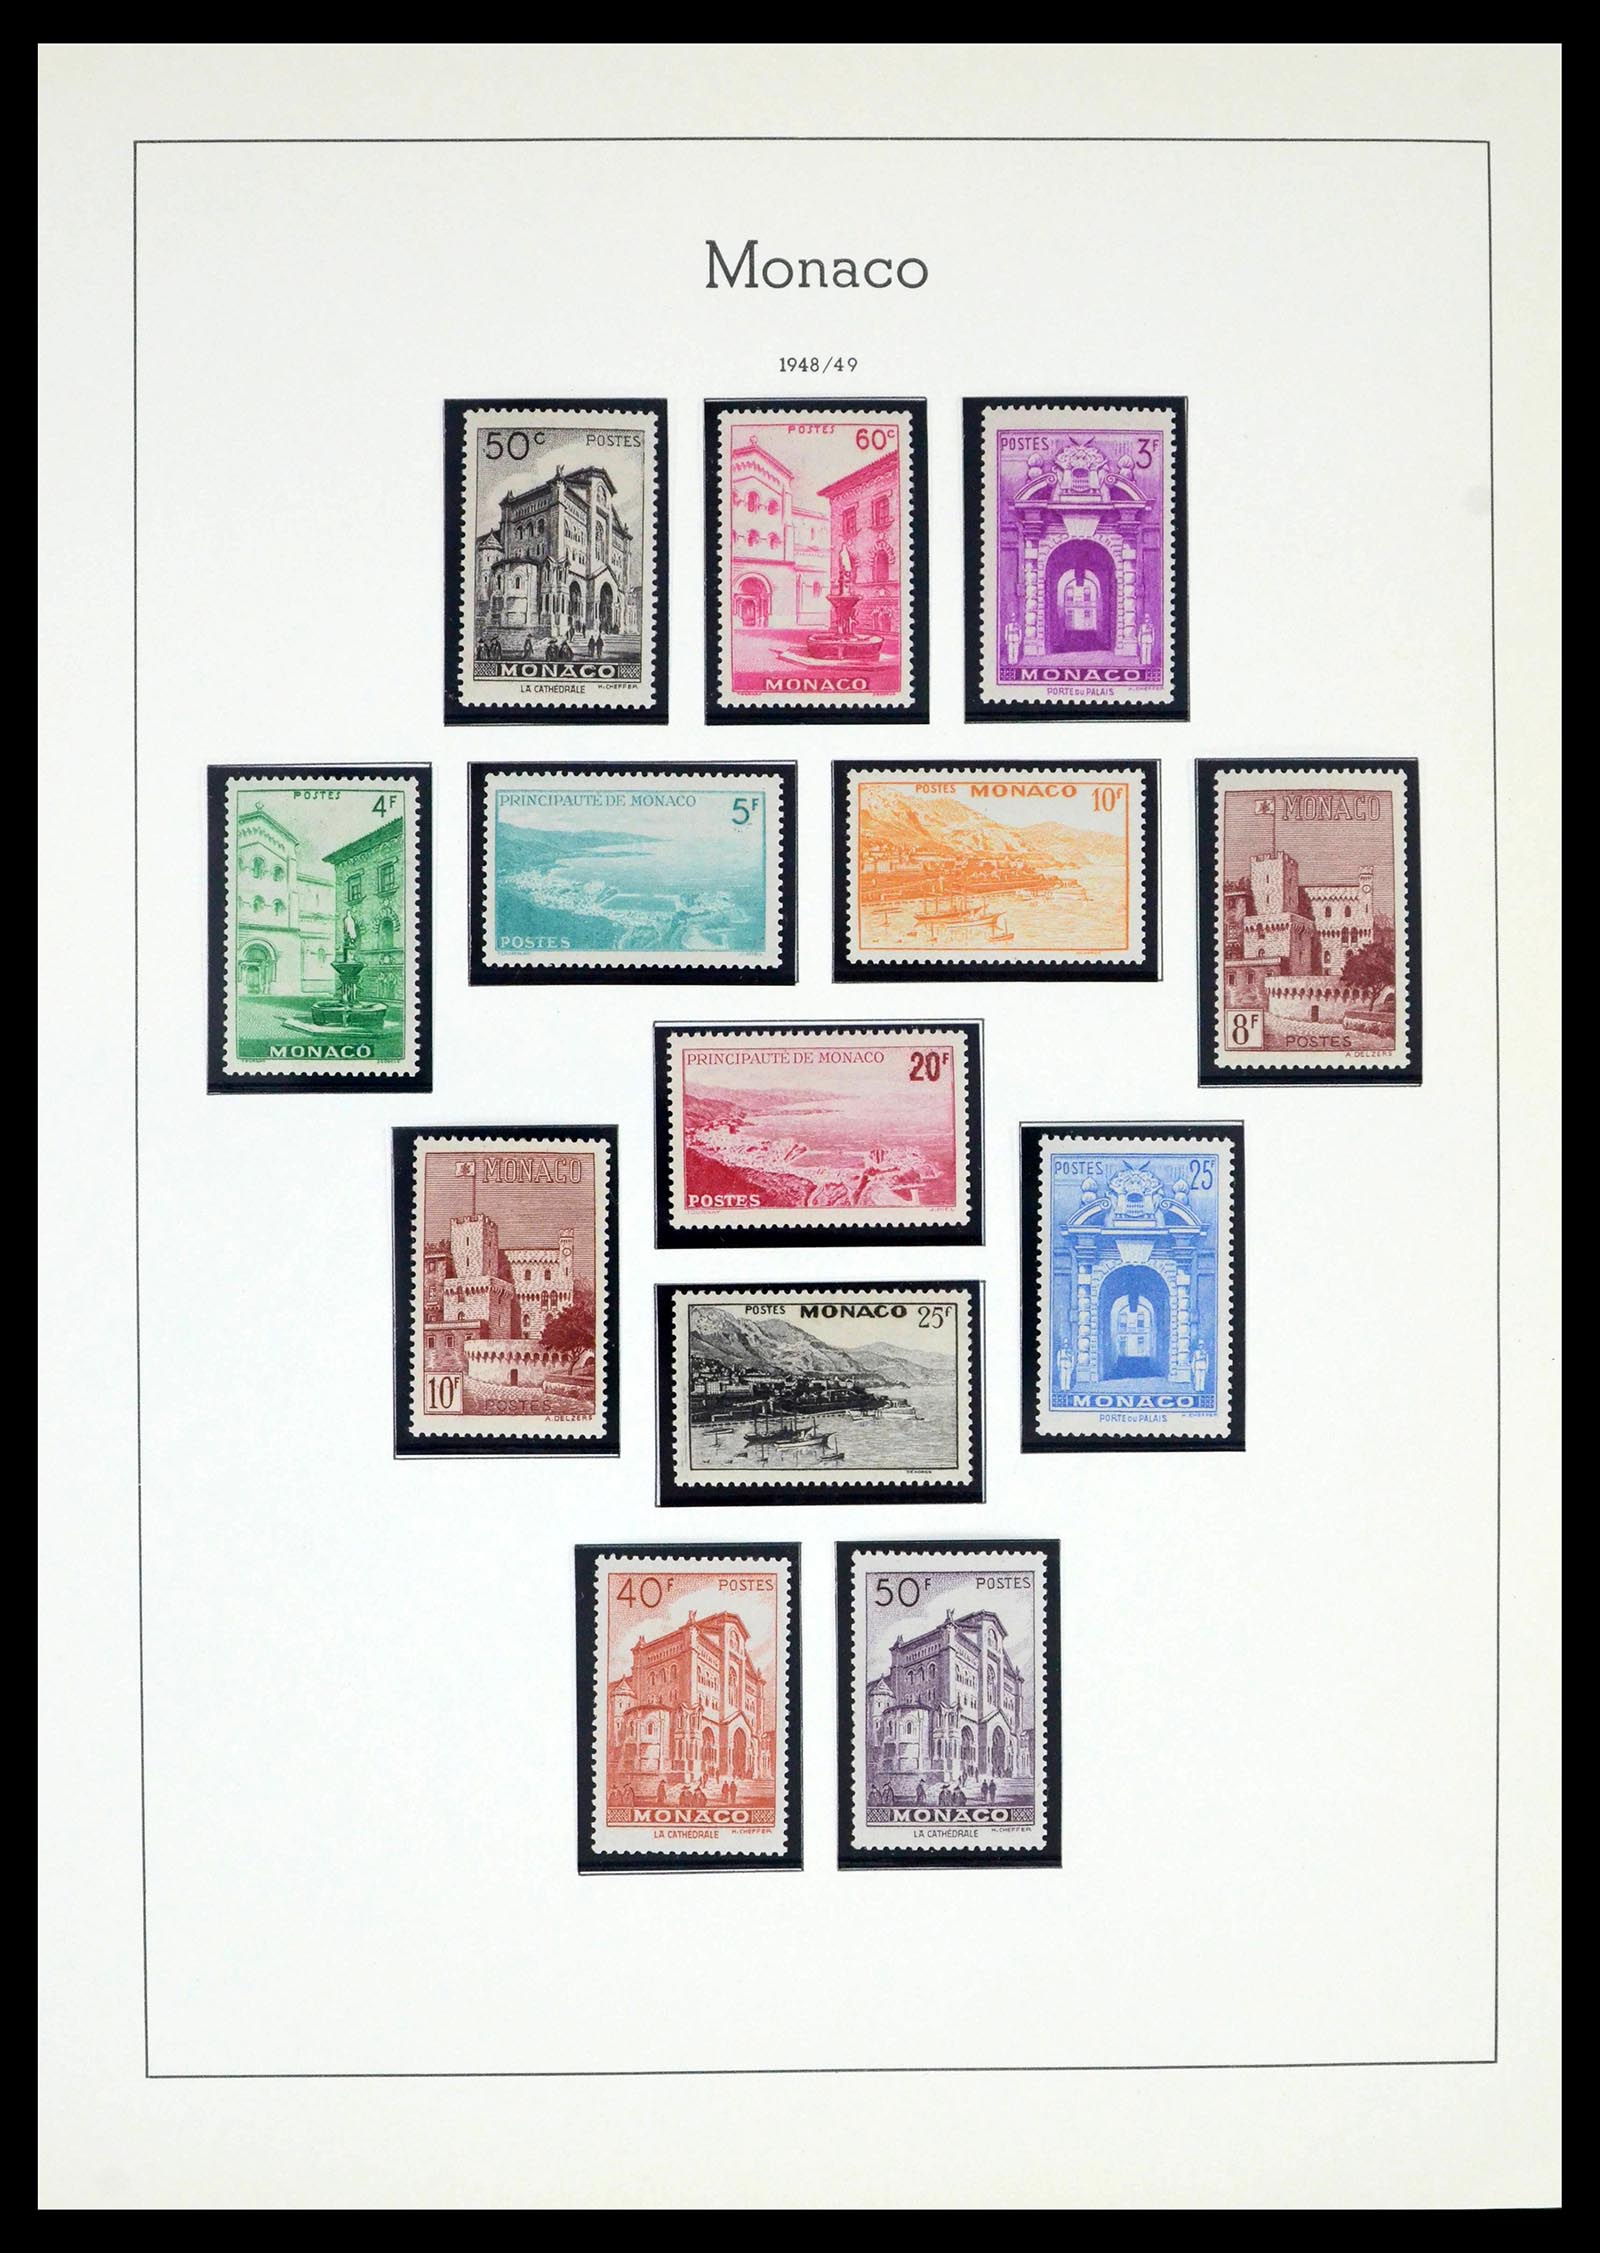 39392 0034 - Stamp collection 39392 Monaco 1885-1999.